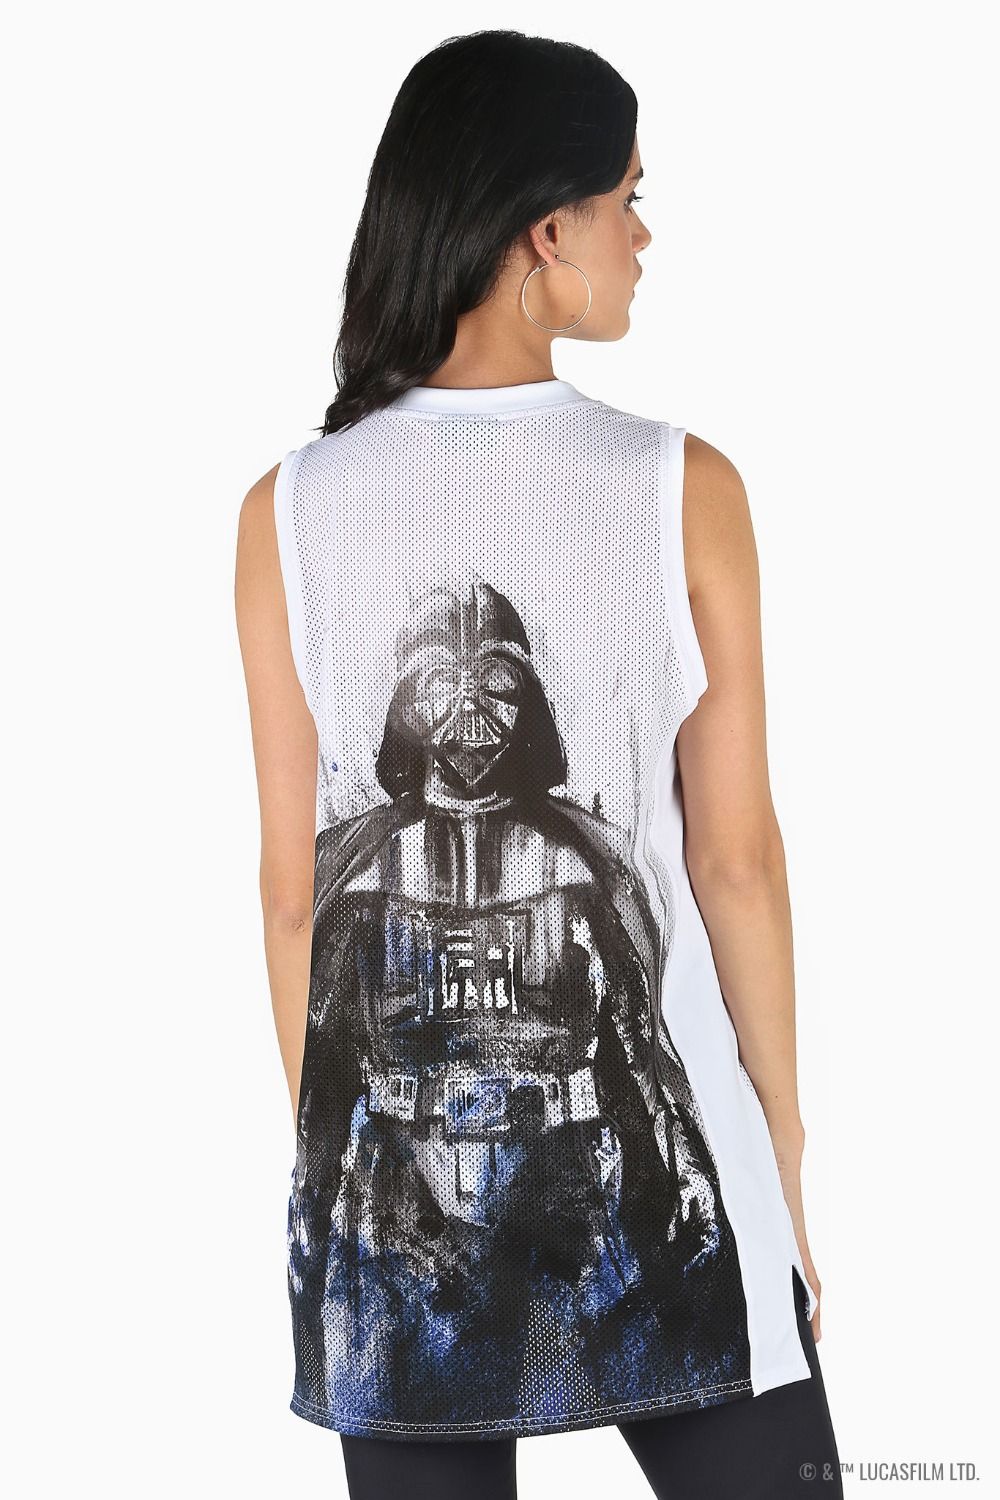 Black Milk Clothing x Star Wars Darth Vader Shooter Athletic Tank Top